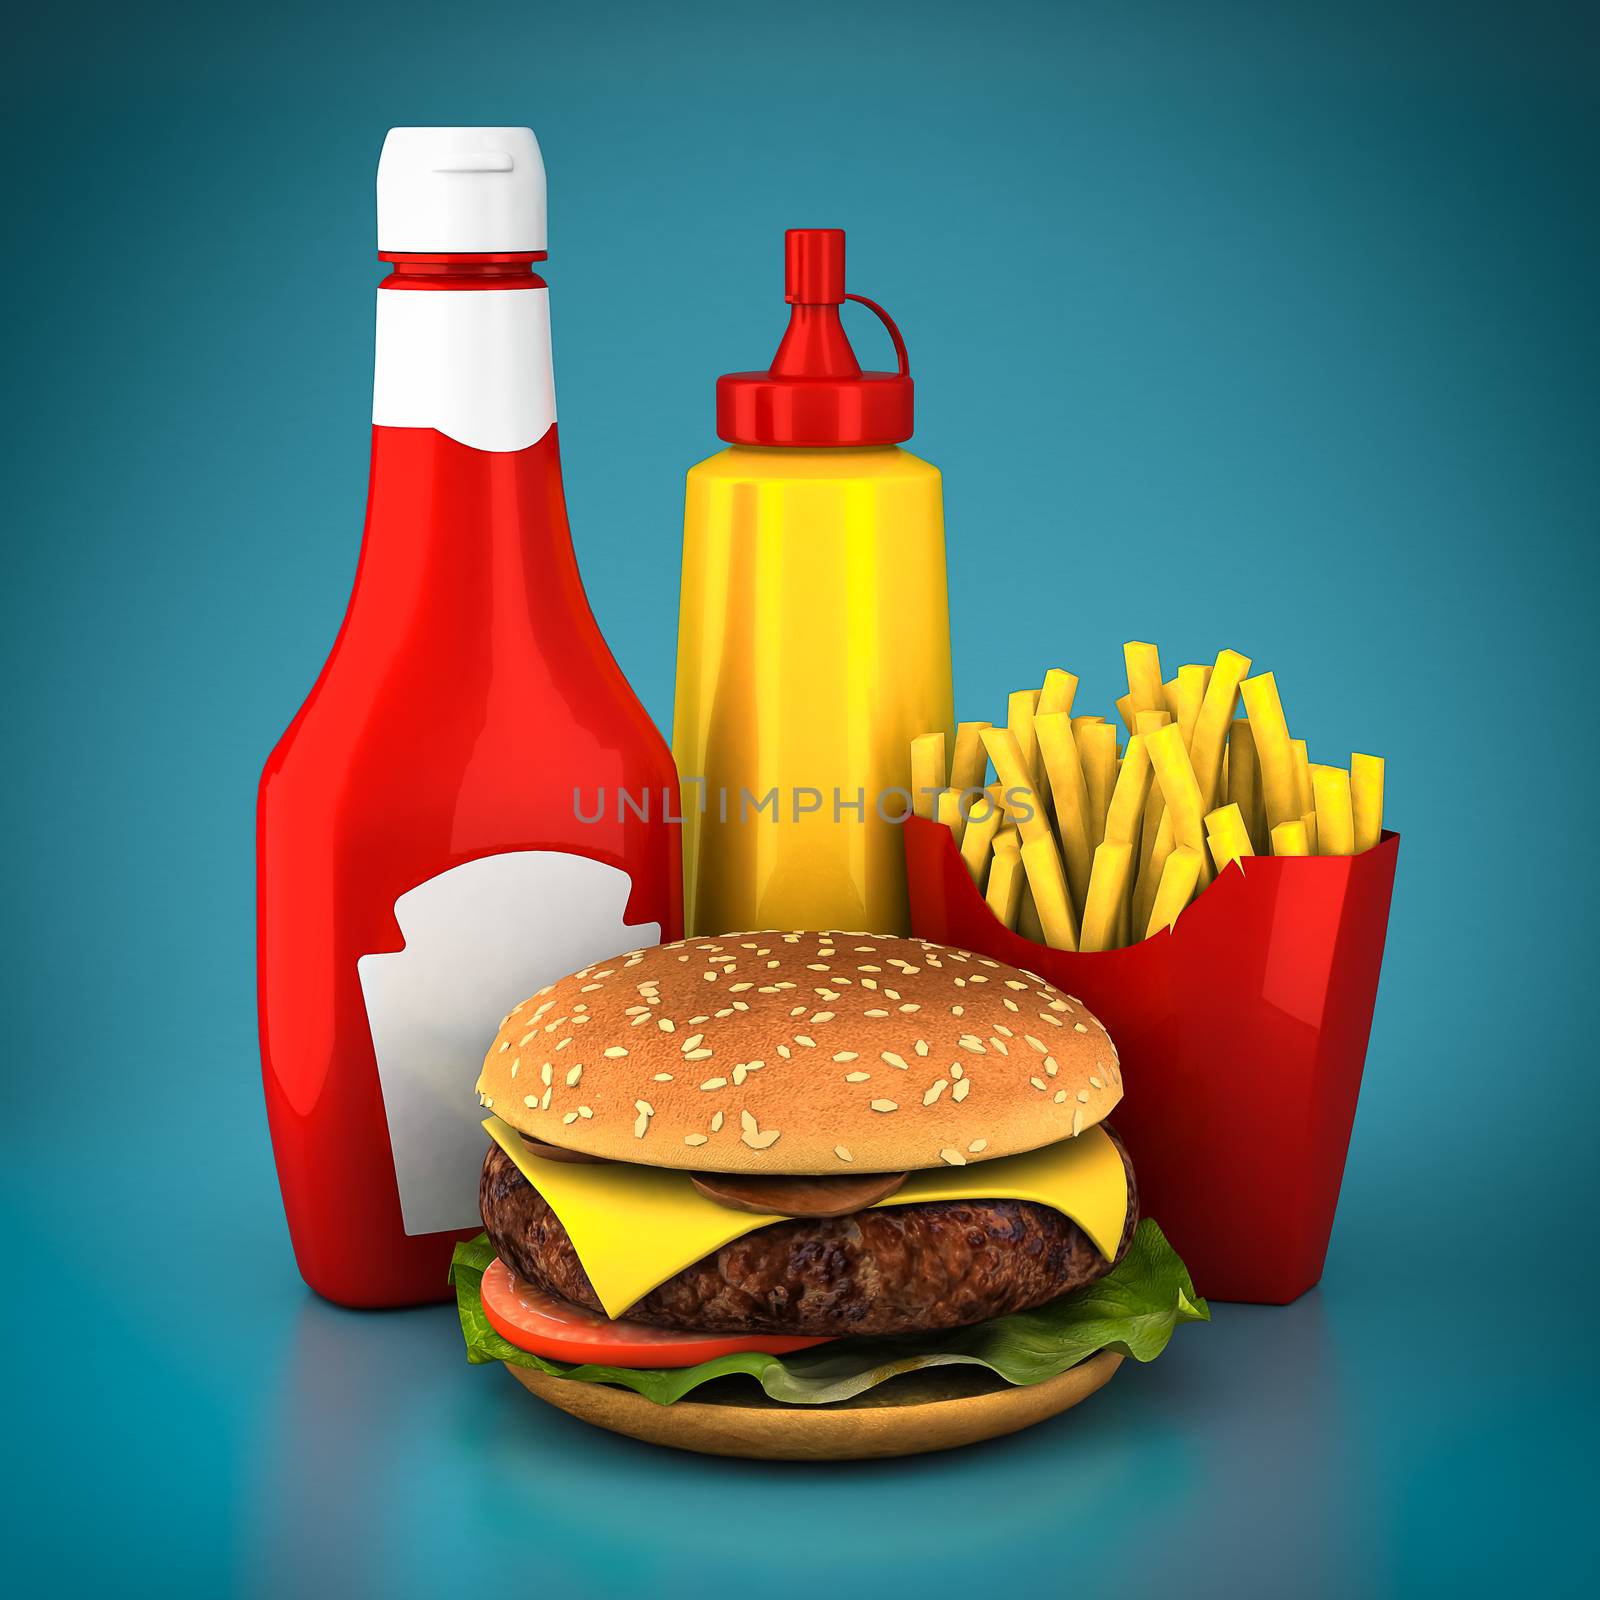 Hamburger, french fries, mustard and ketchup by mrgarry